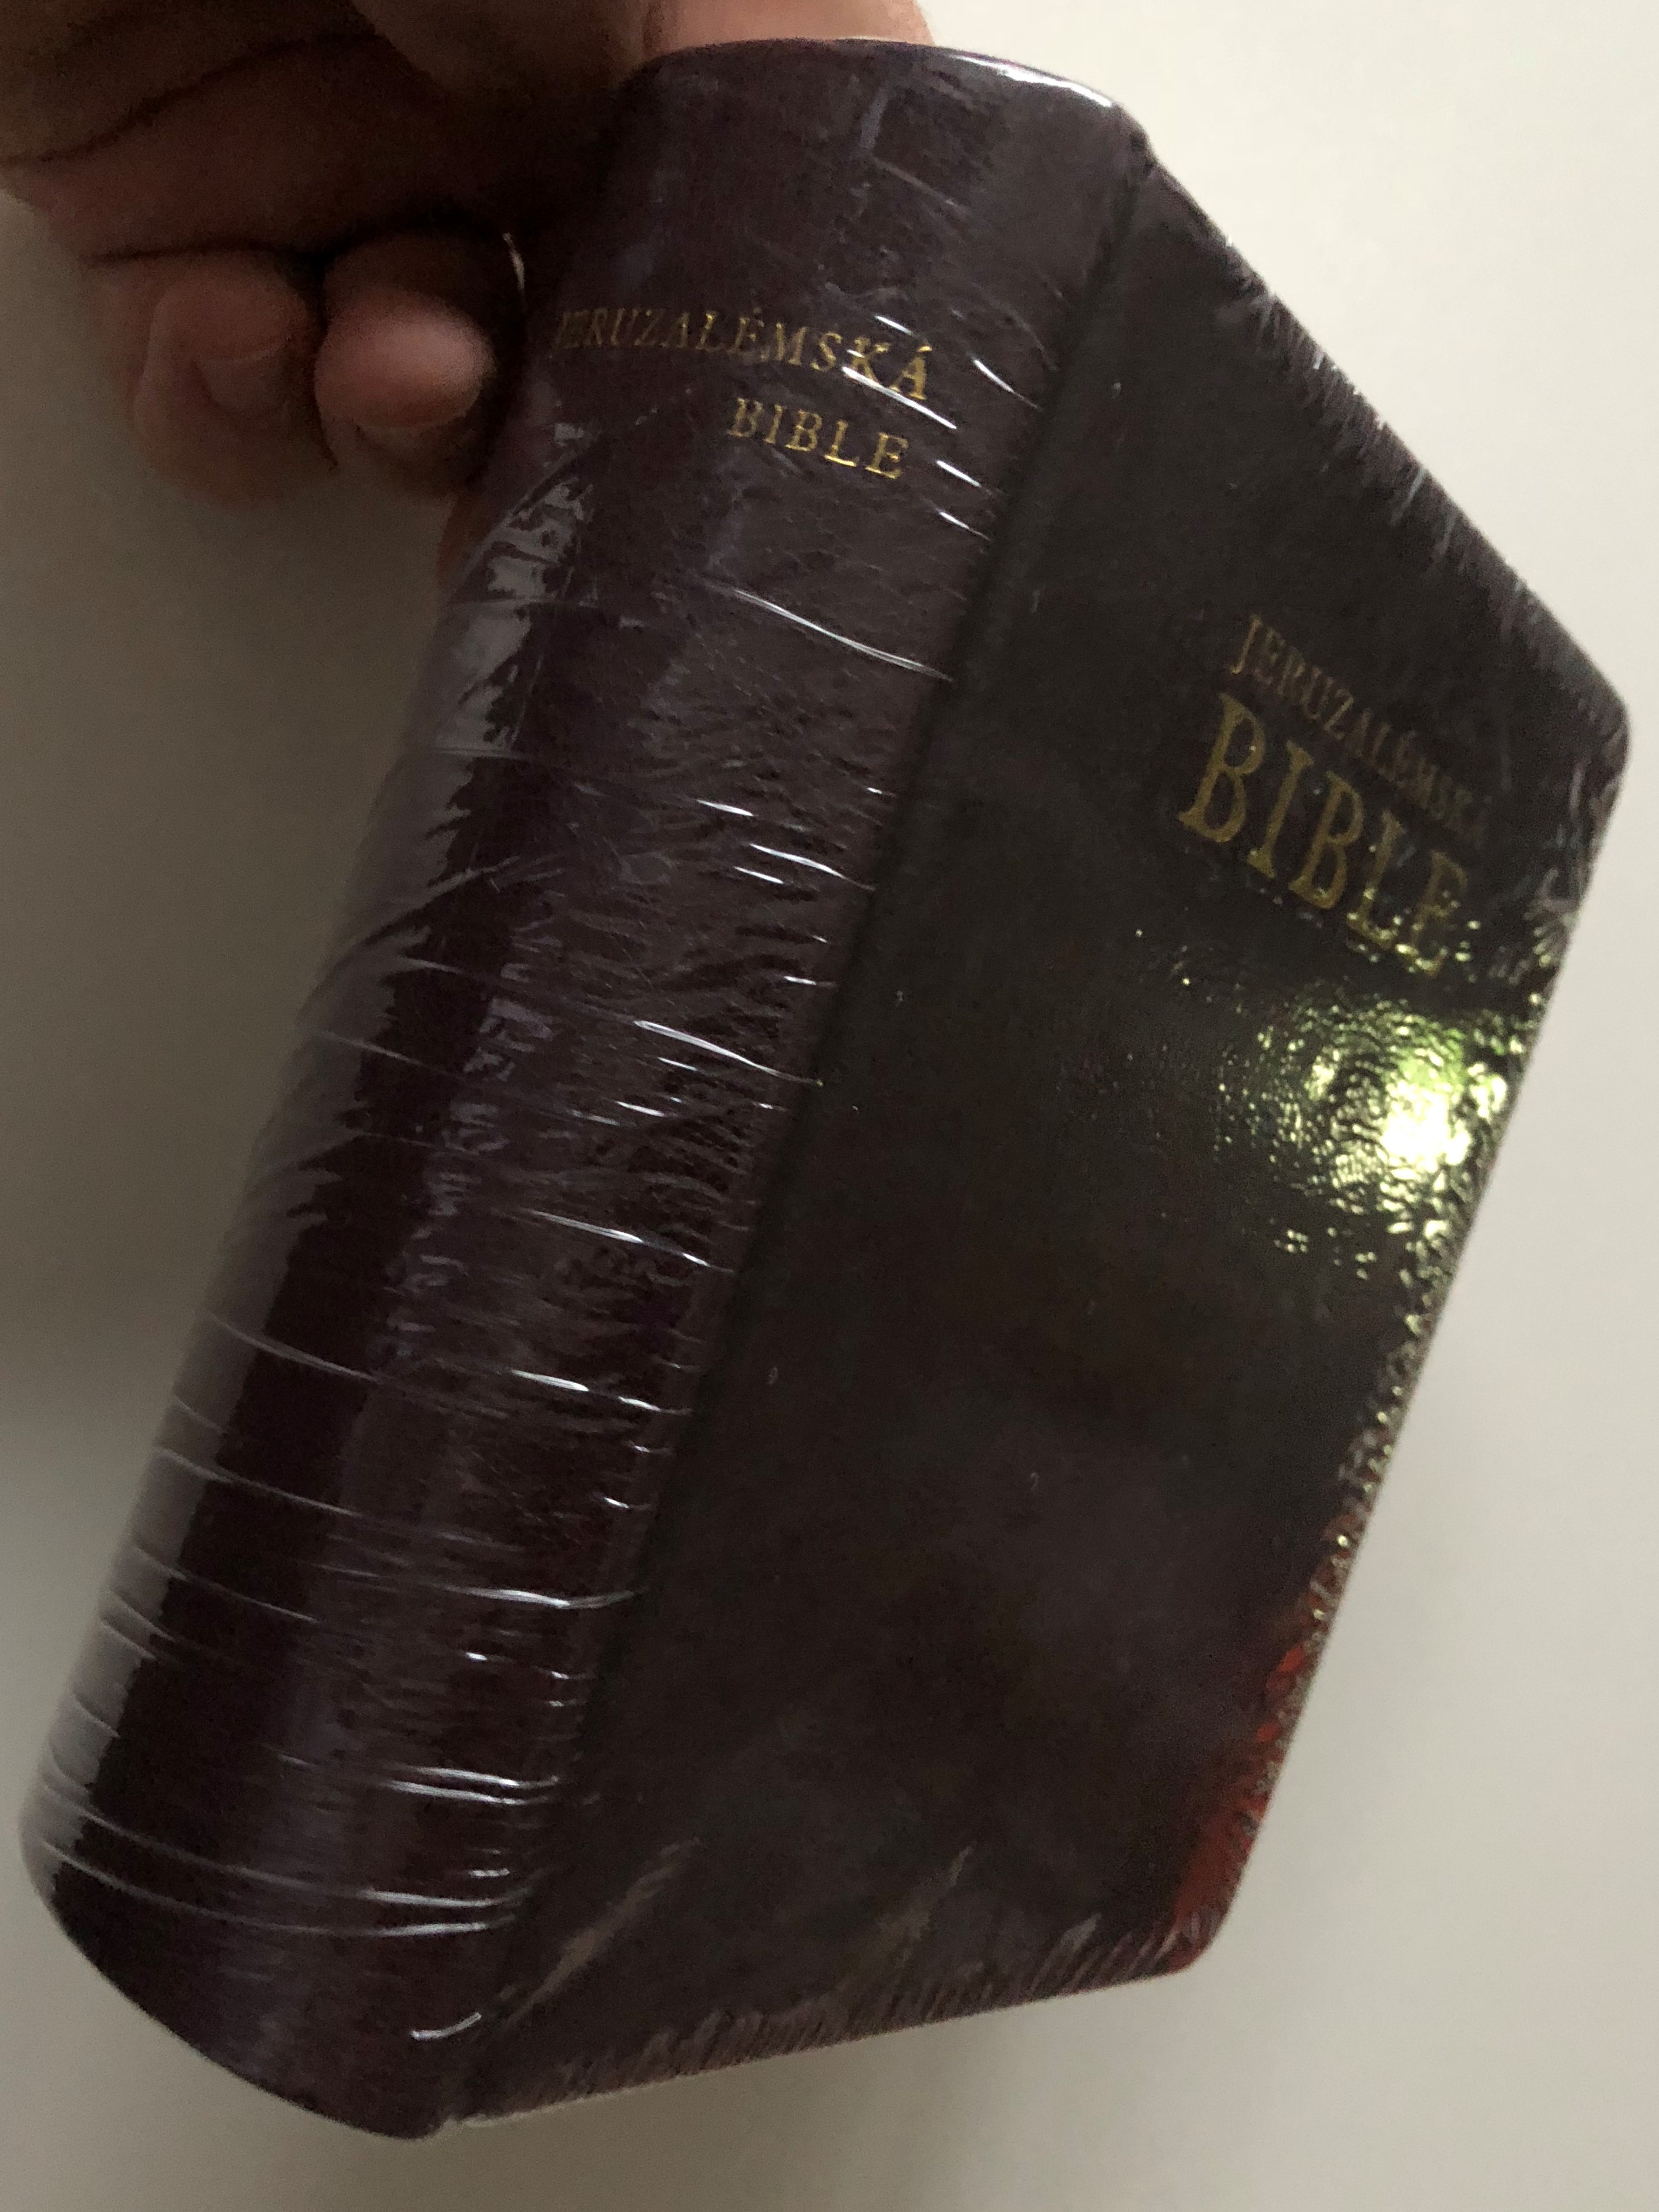 jeruzal-msk-bible-jerusalem-bible-in-czech-language-p-smo-svat-vydan-jeruzal-mskou-biblickou-kolou-brown-leather-bound-with-golden-edges-thumb-index-contains-deuterocanonical-books-catholic-version-2-.jpg